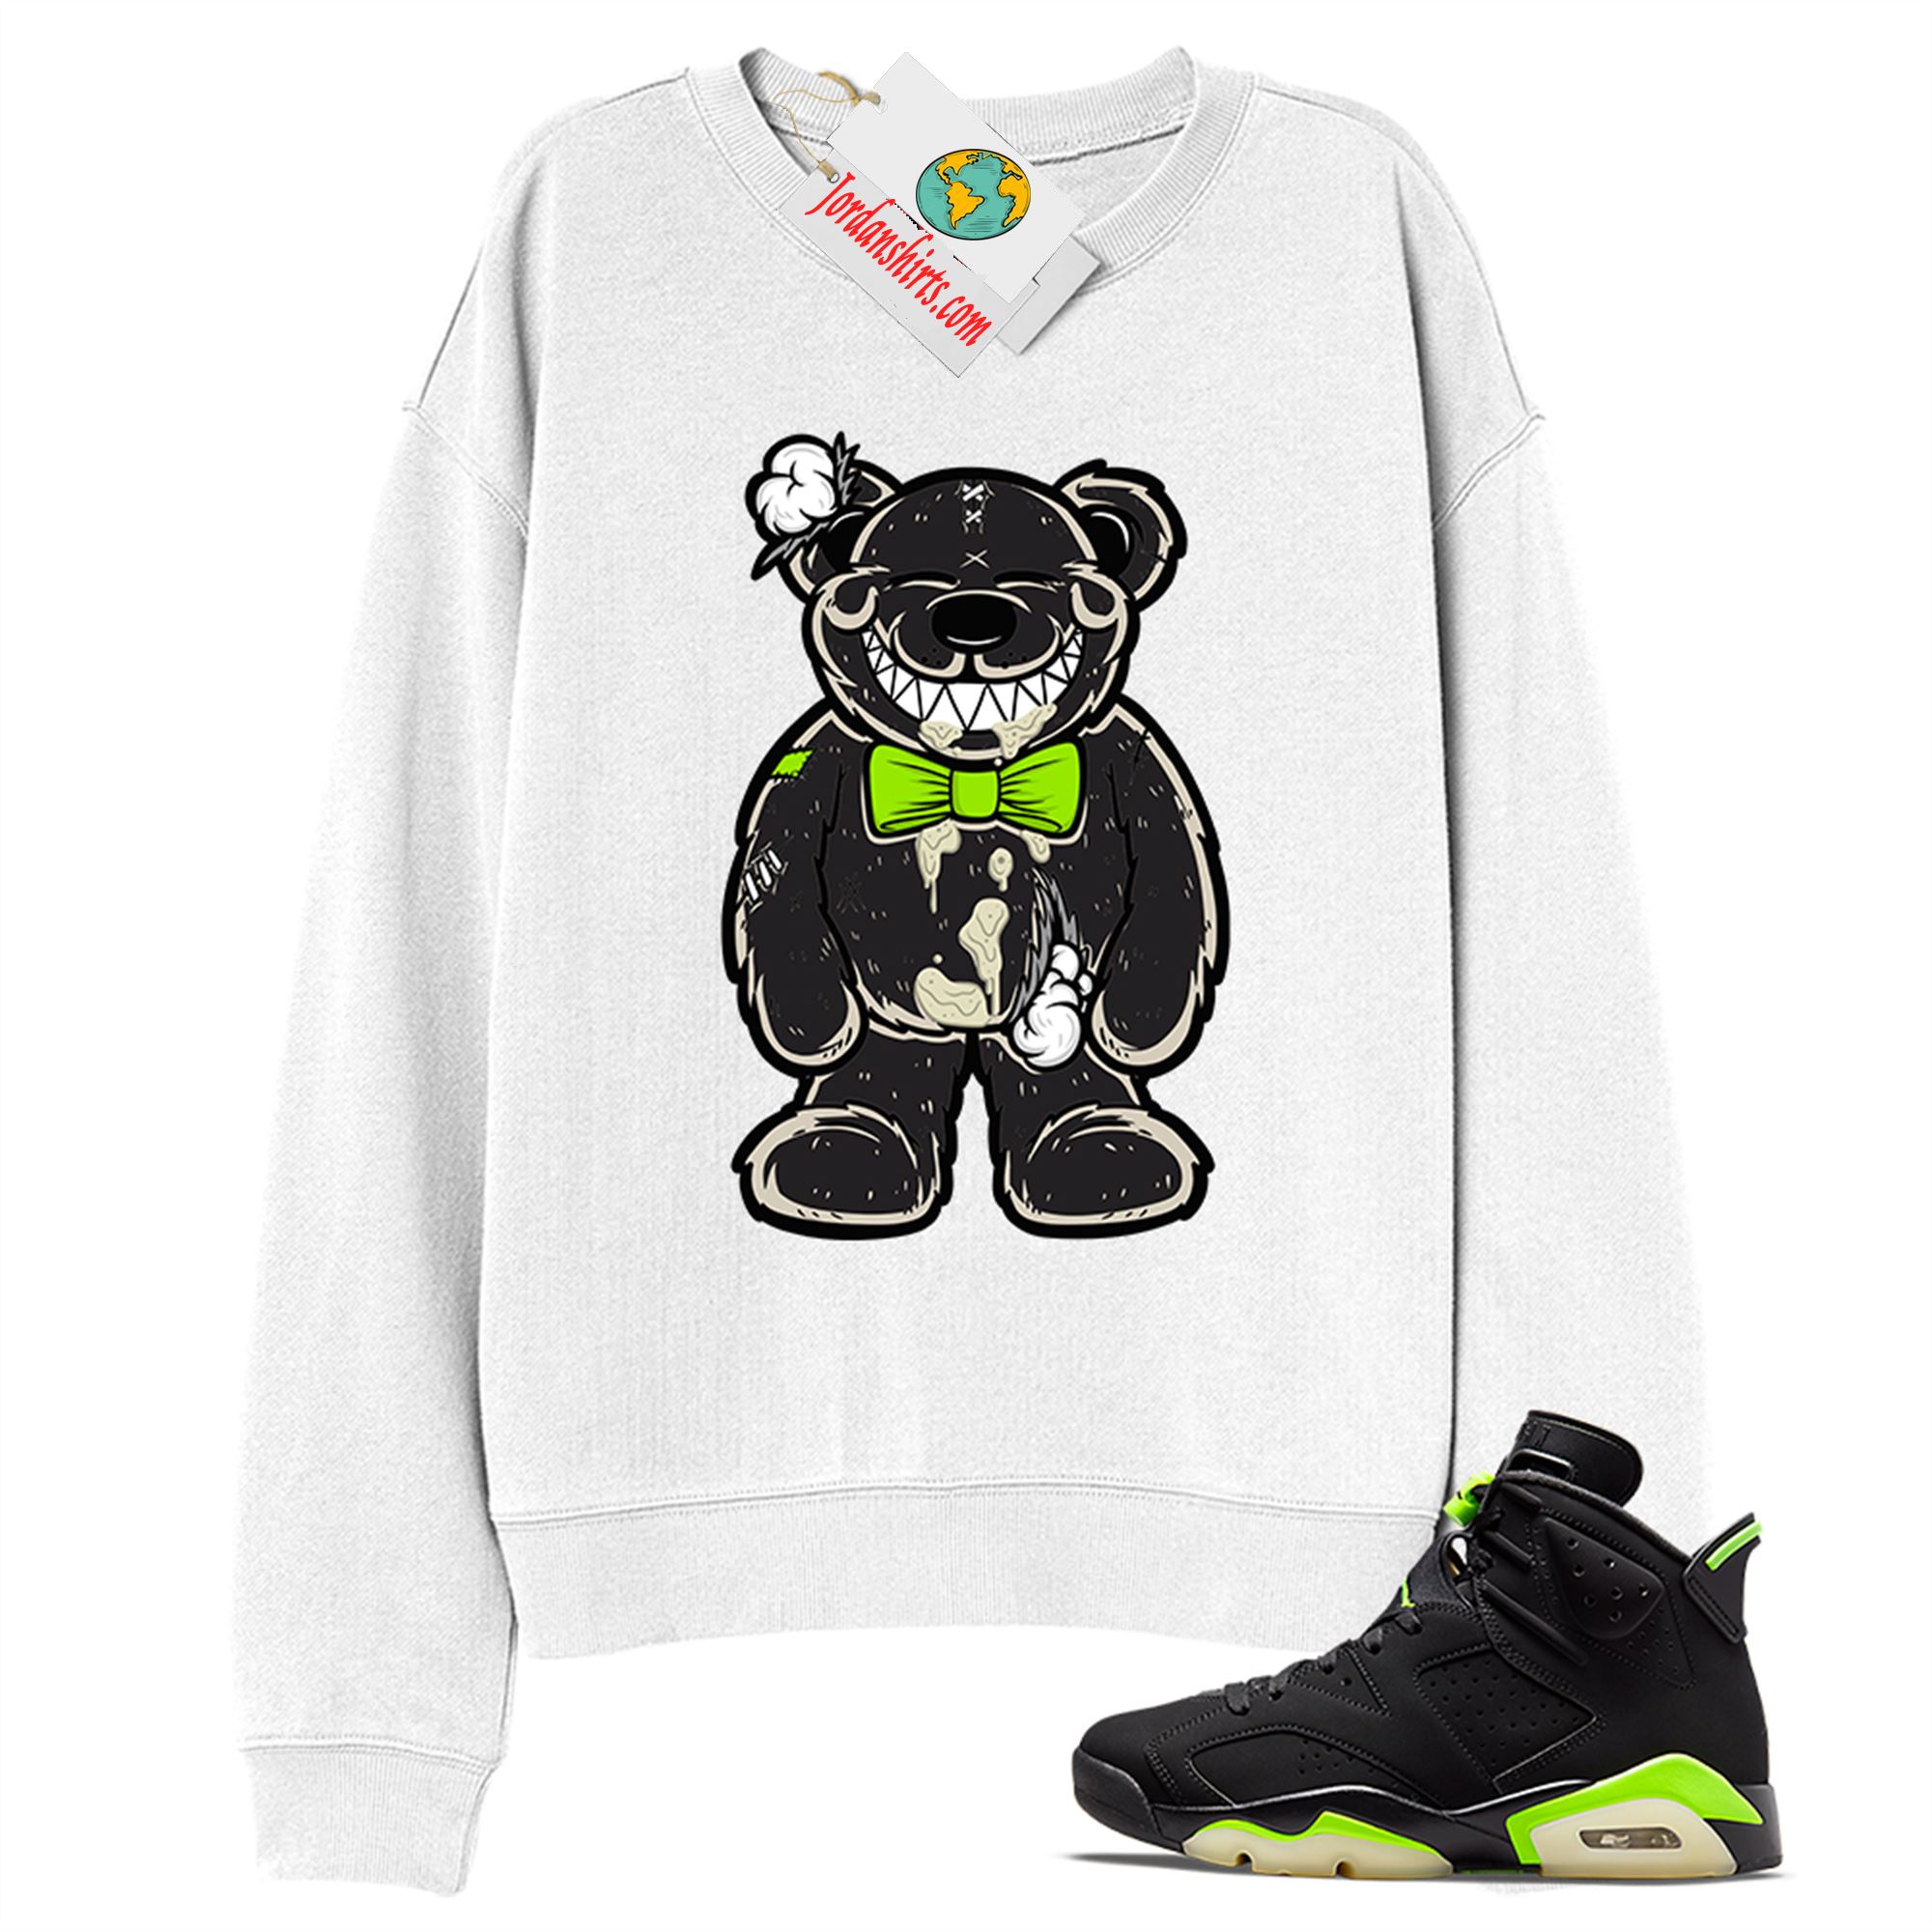 Jordan 6 Sweatshirt, Teddy Bear Smile White Sweatshirt Air Jordan 6 Electric Green 6s Plus Size Up To 5xl